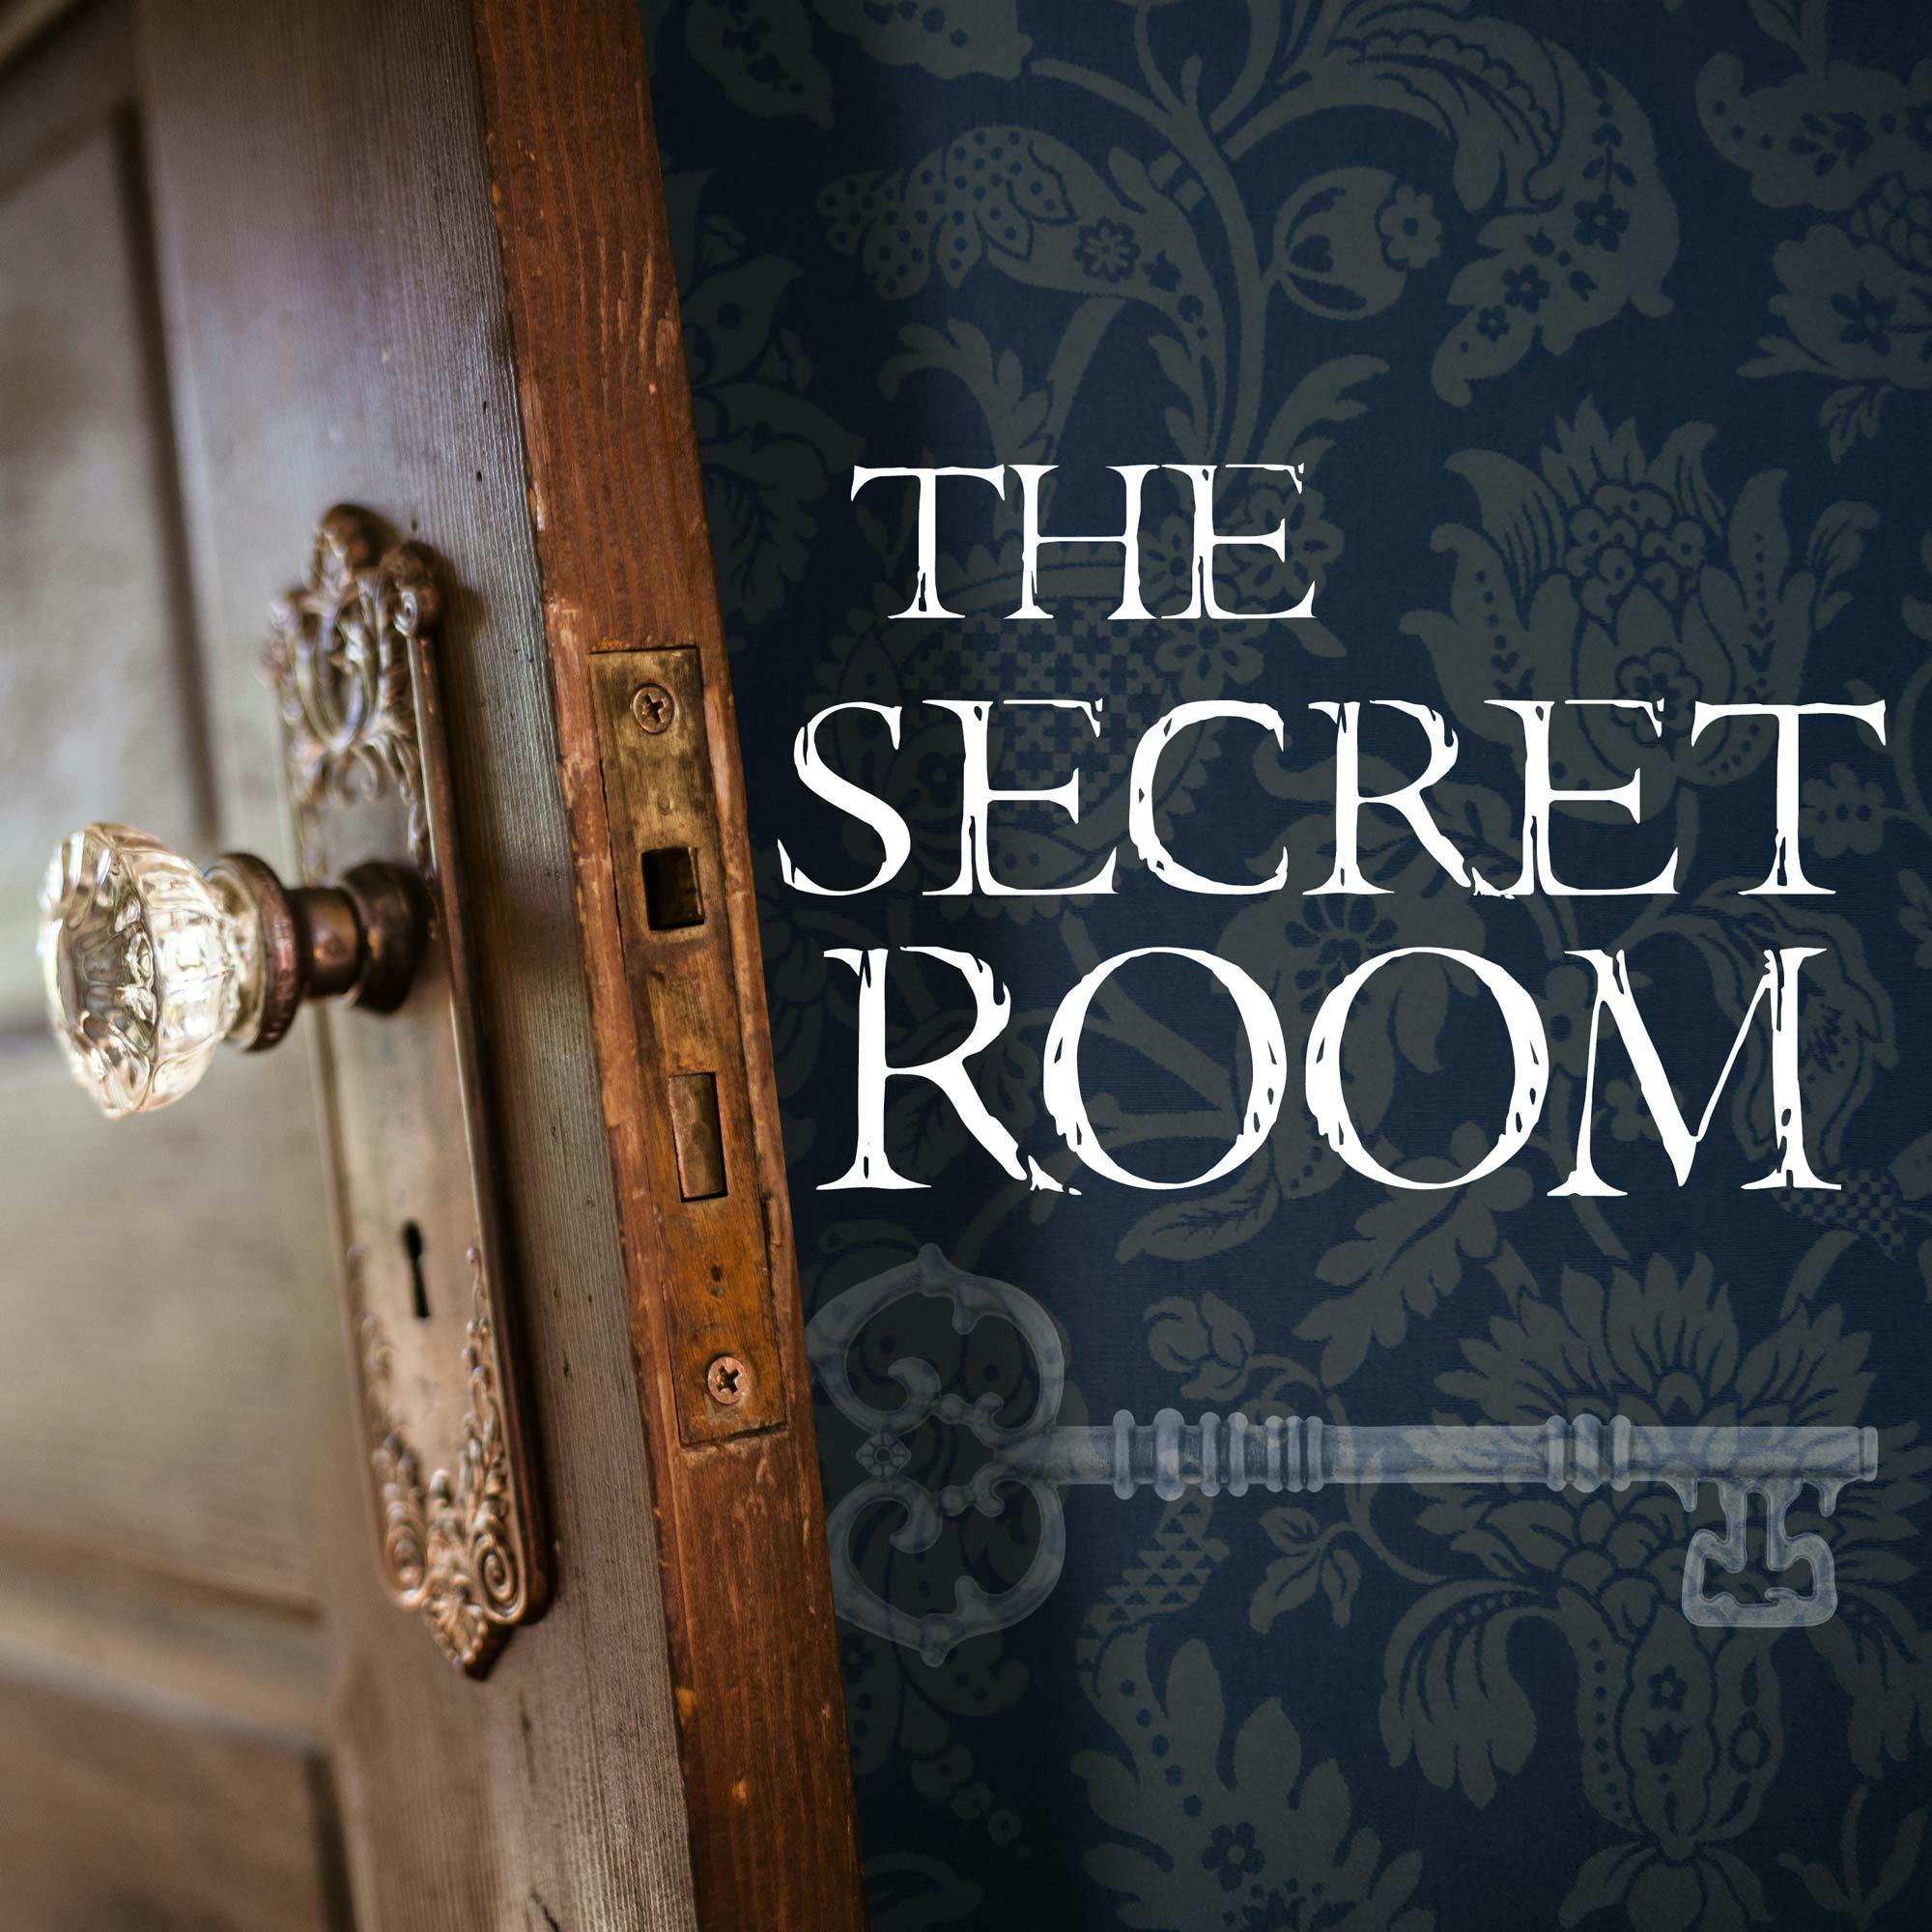 The Secret Room True Stories